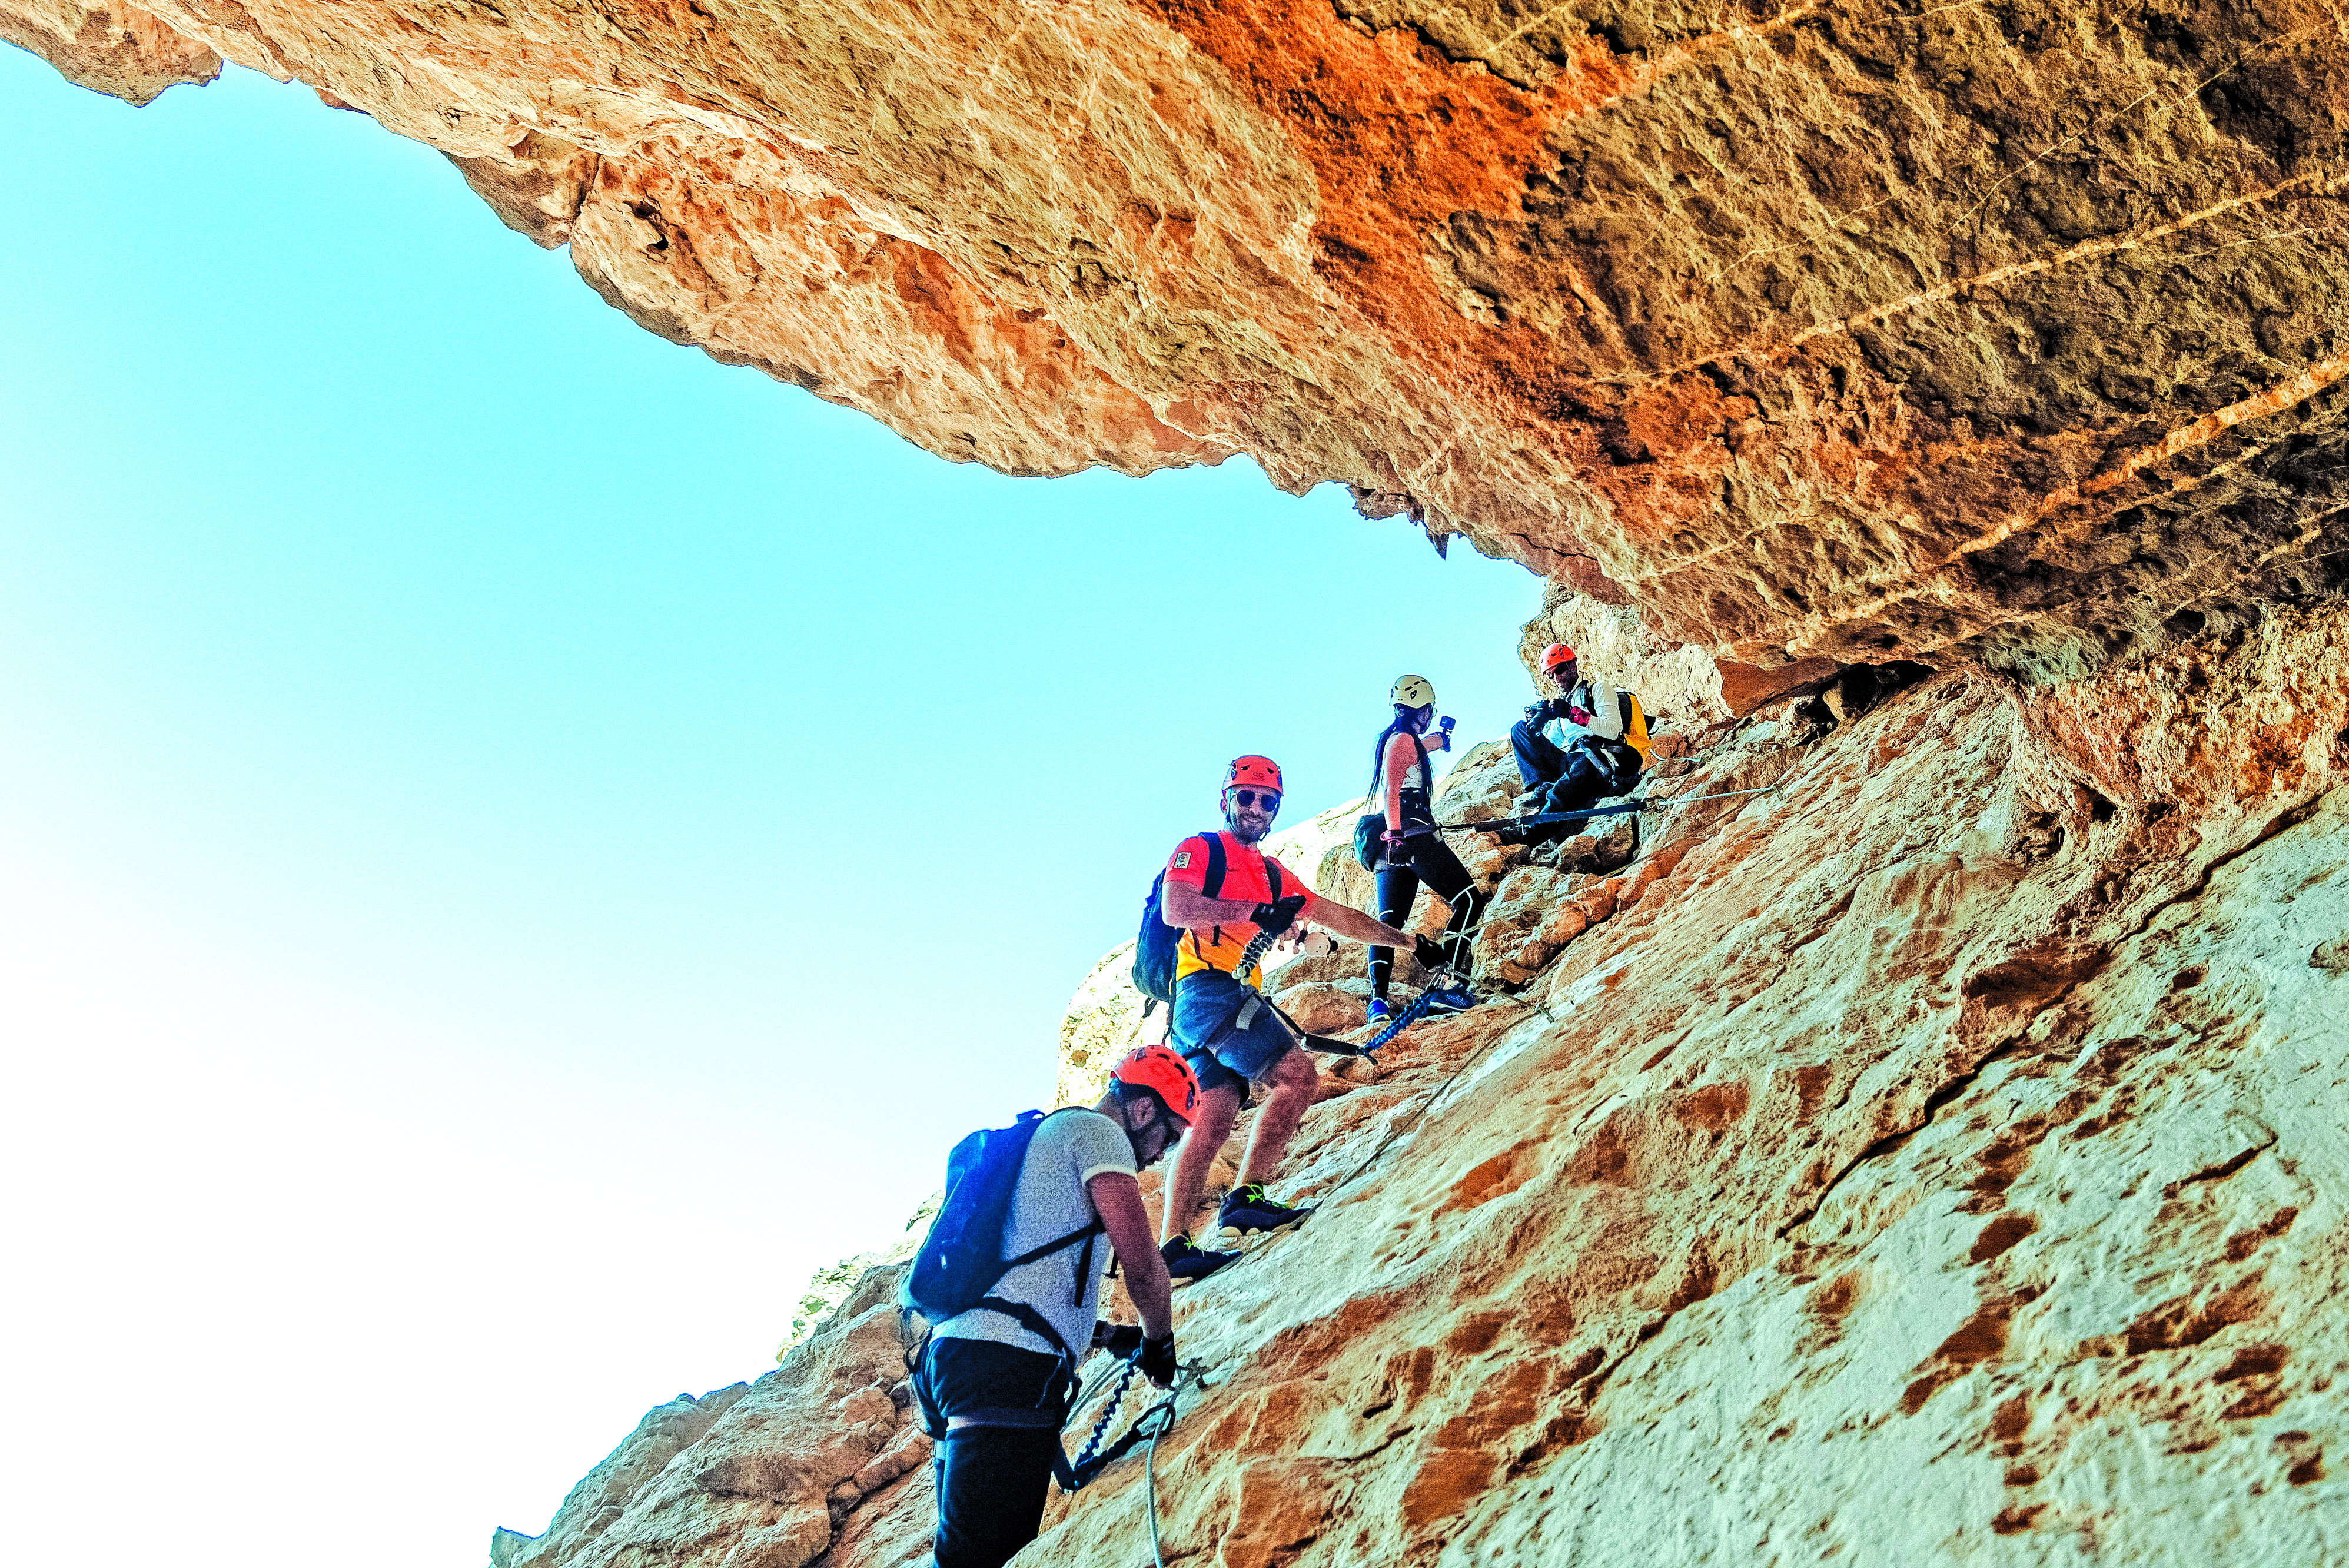 Explore new adventures at Alila Jabal Akhdar in Oman